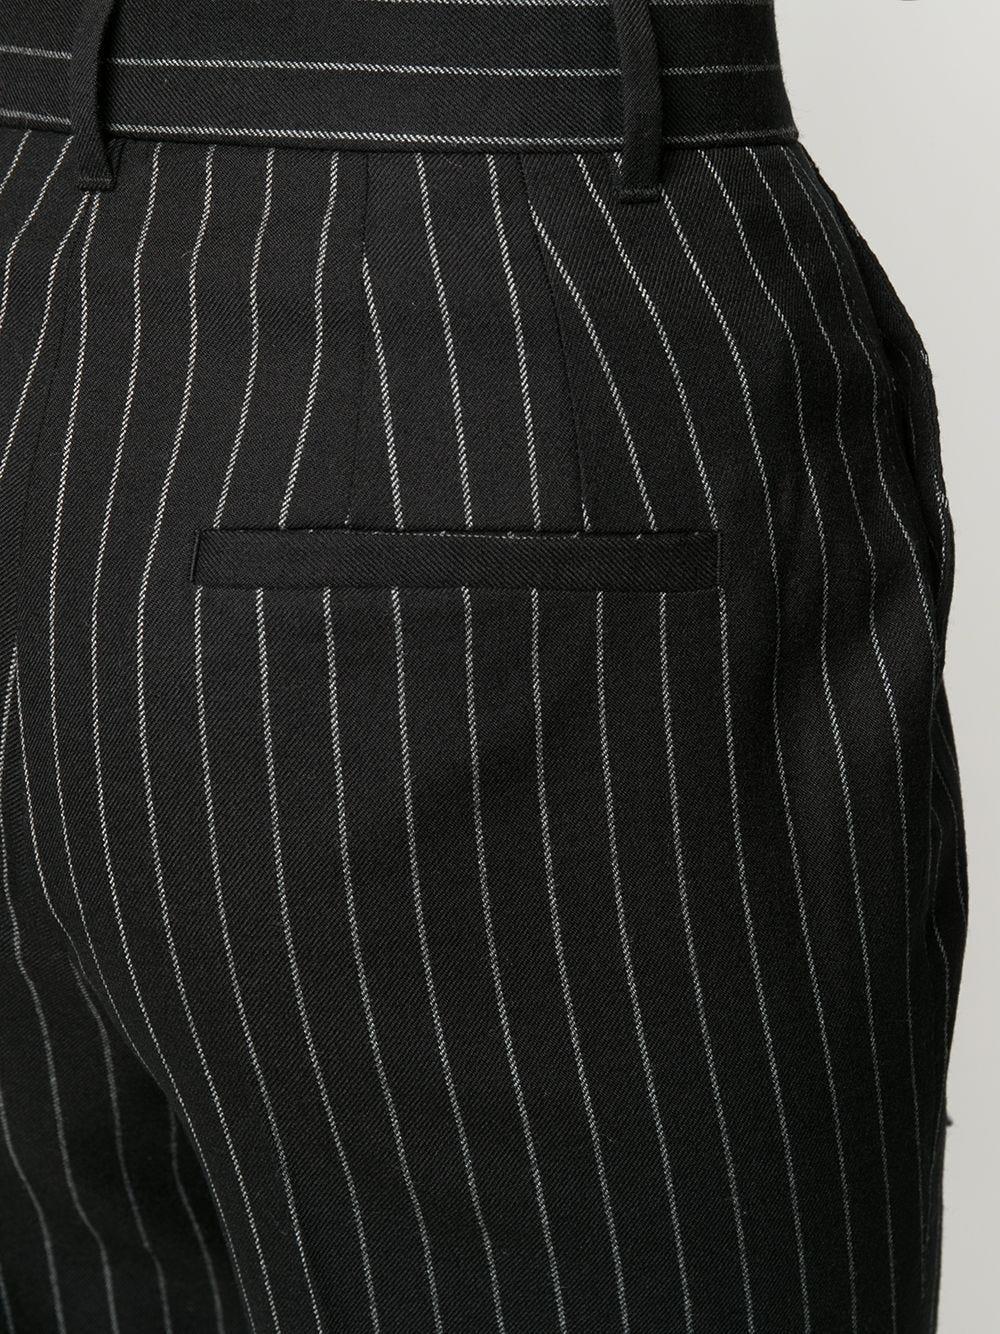 Dolce & Gabbana Velvet Pinstripe Woolen Pants in Black - Lyst